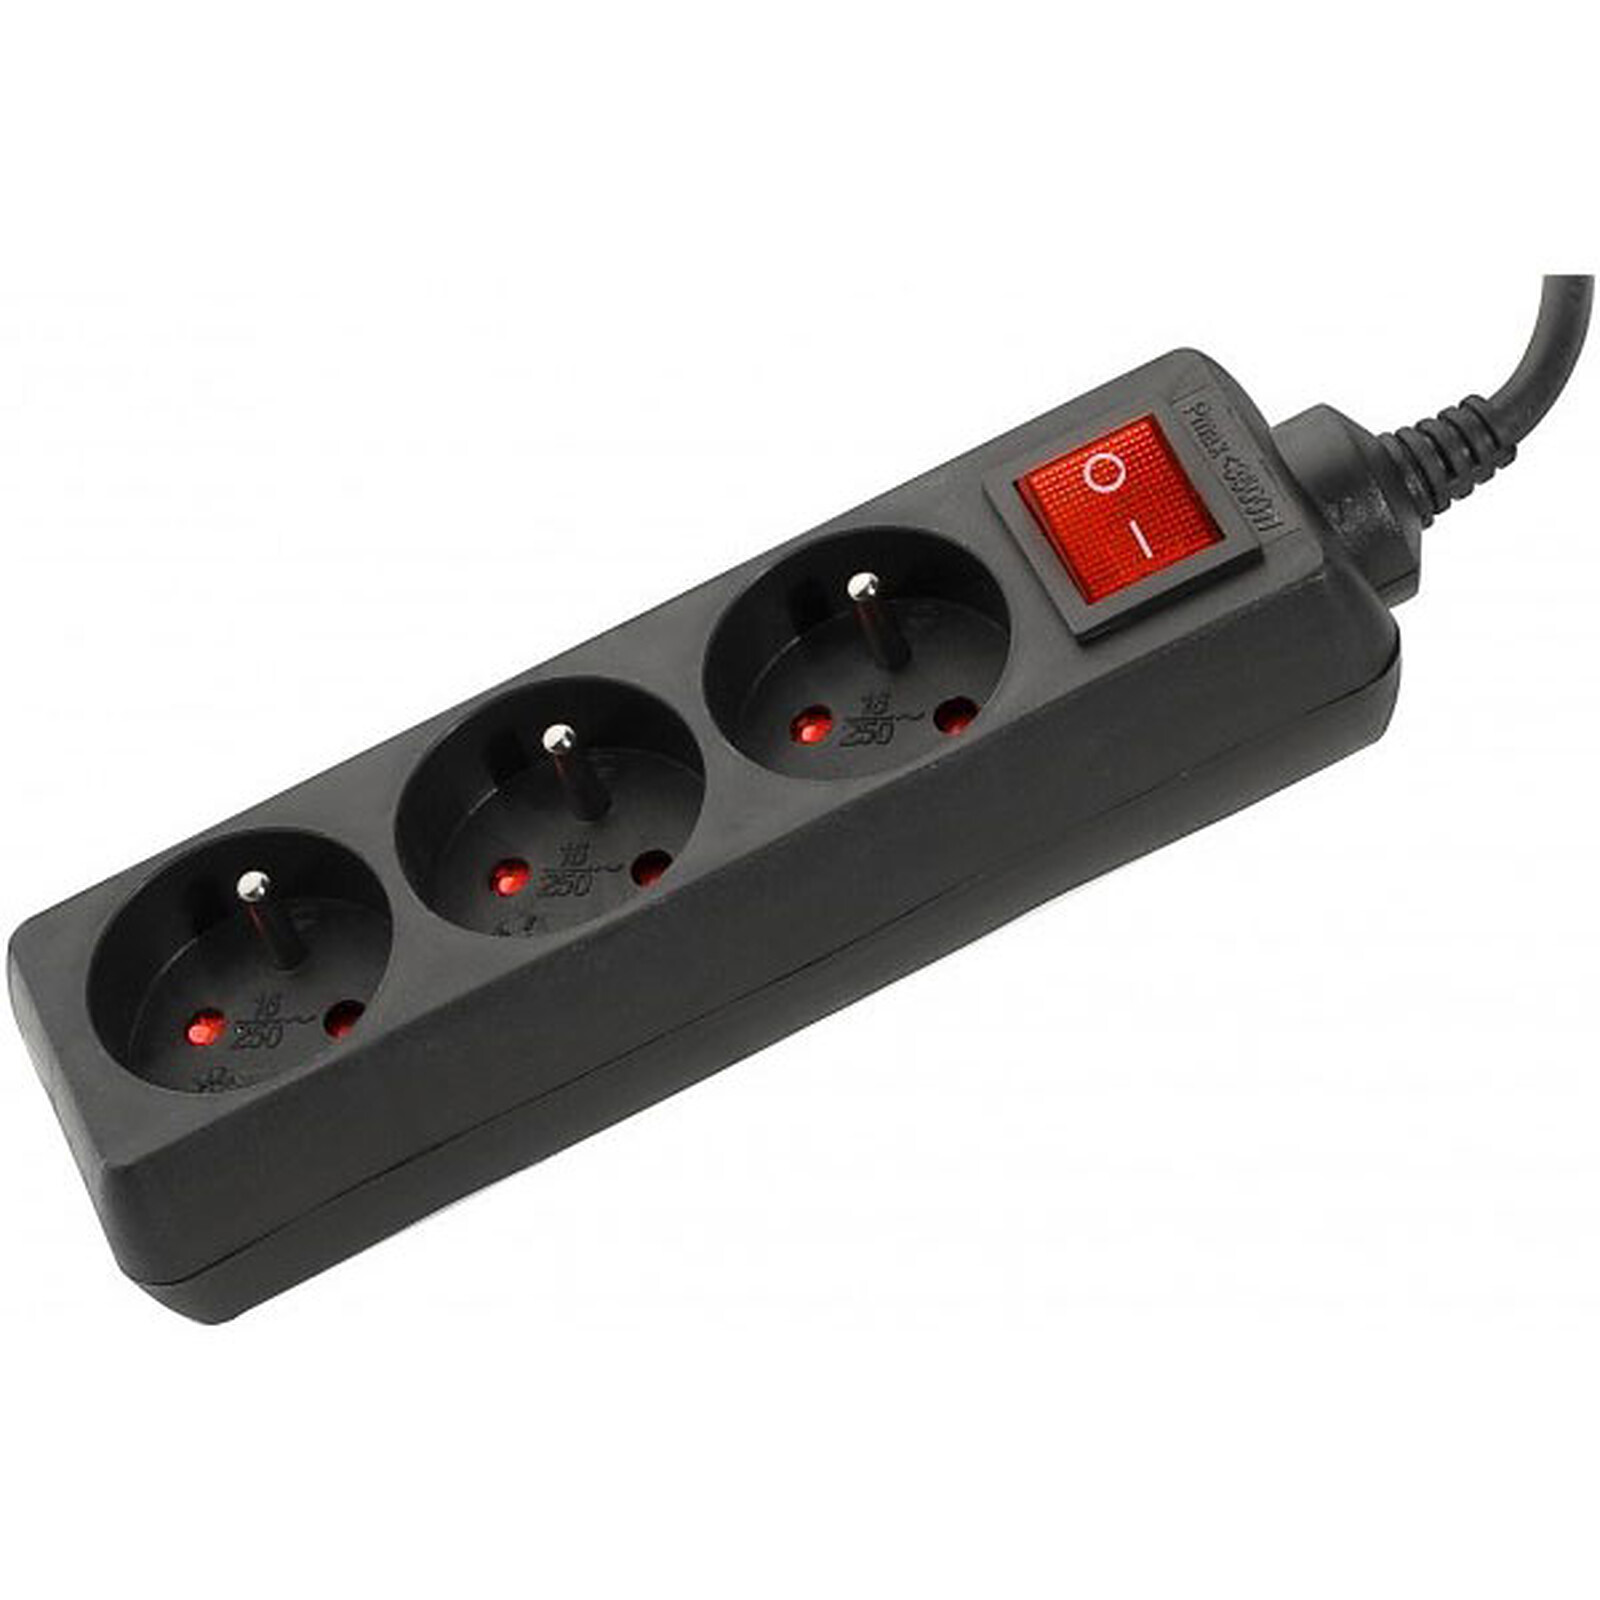 KabelDirekt – Regleta de enchufes 3× y enchufe múltiple (USB